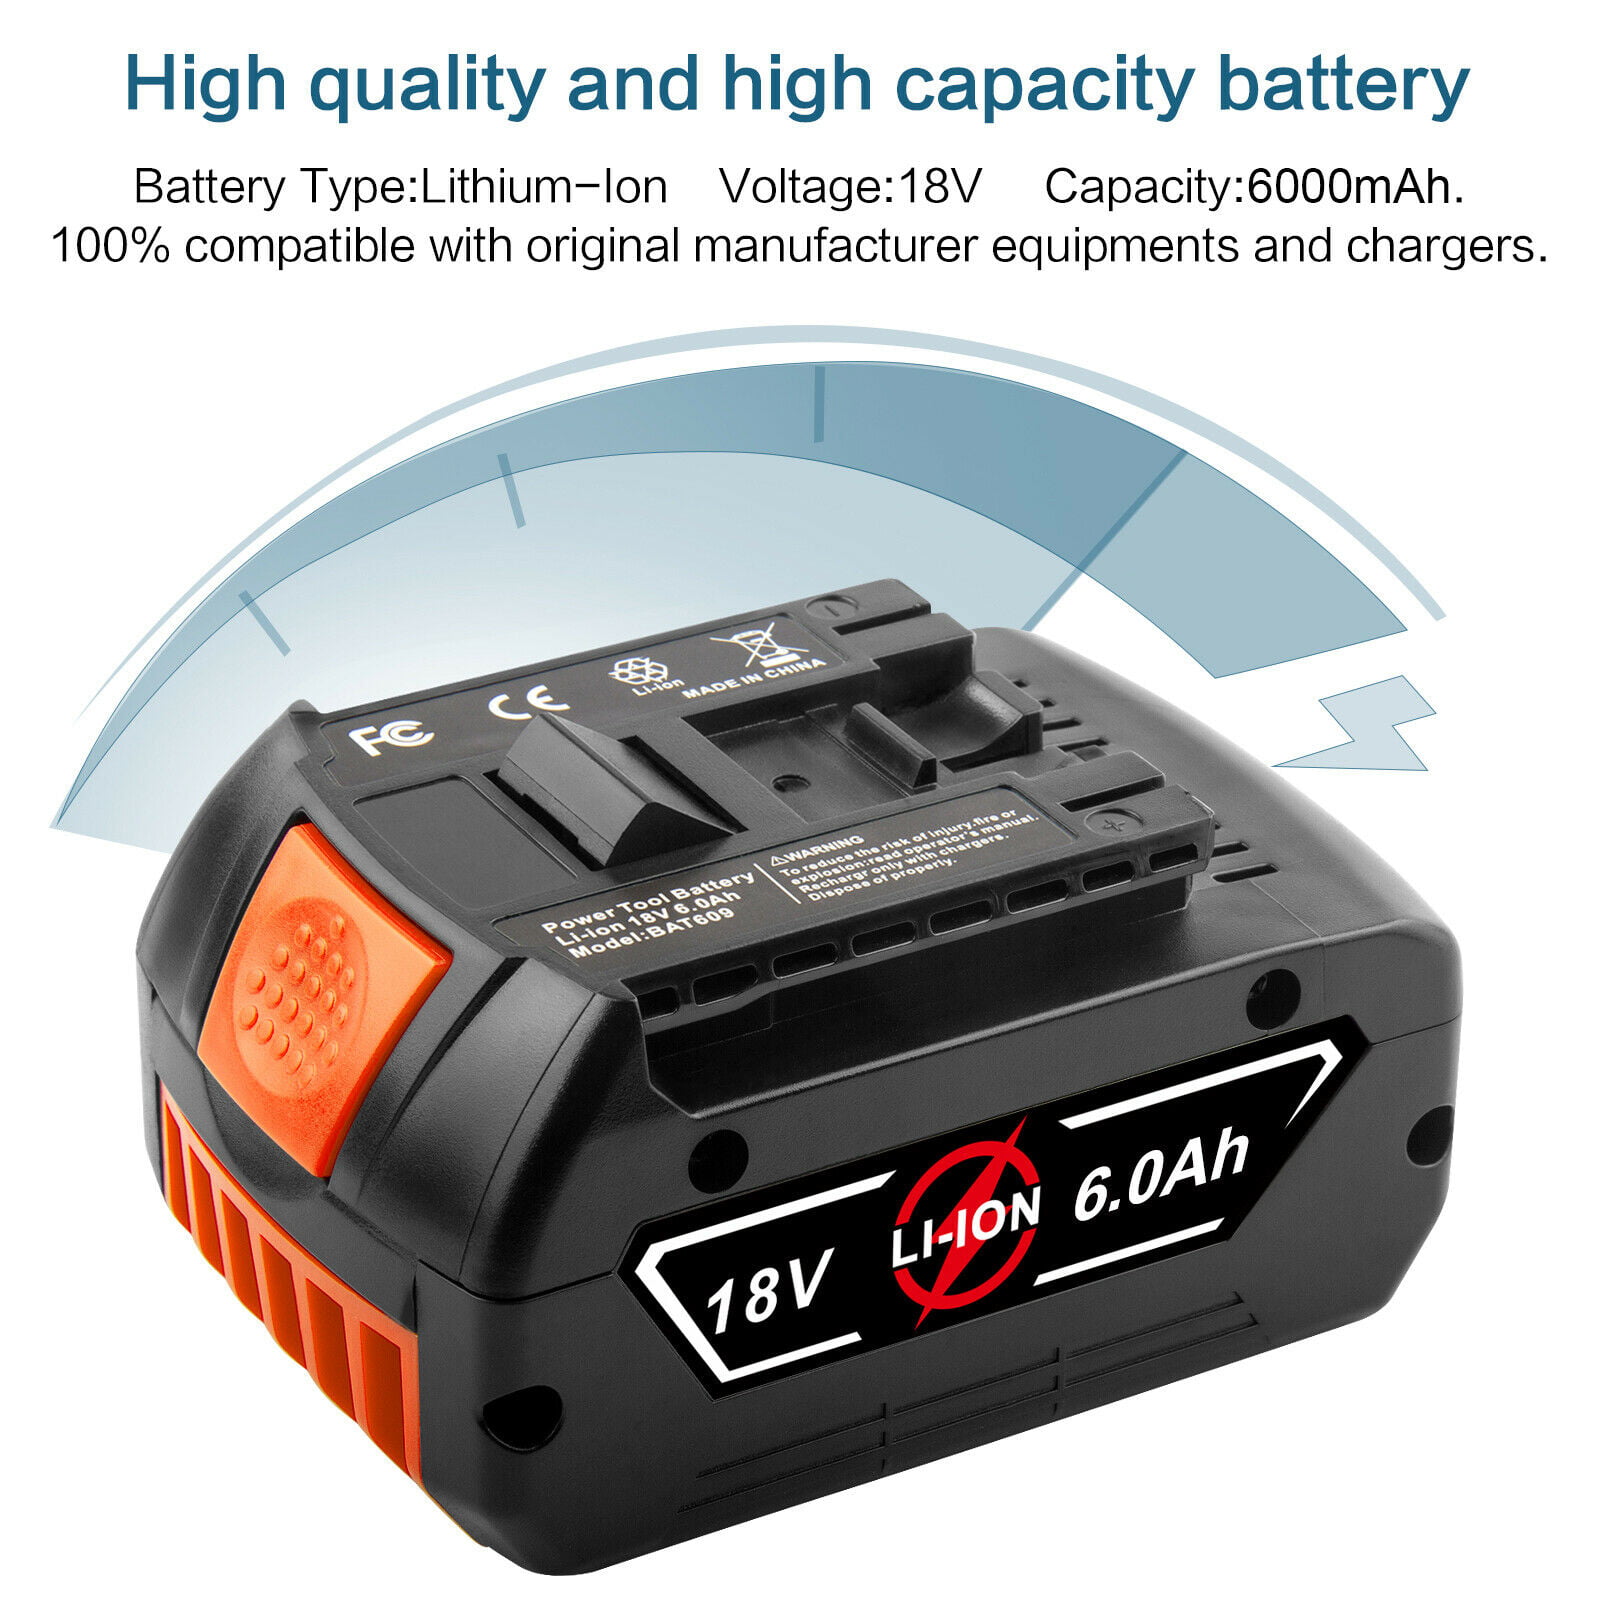 18V 6.0Ah Cordless Li-ion Battery For Bosch BAT609 BAT610 BAT618 17618 25618-01 